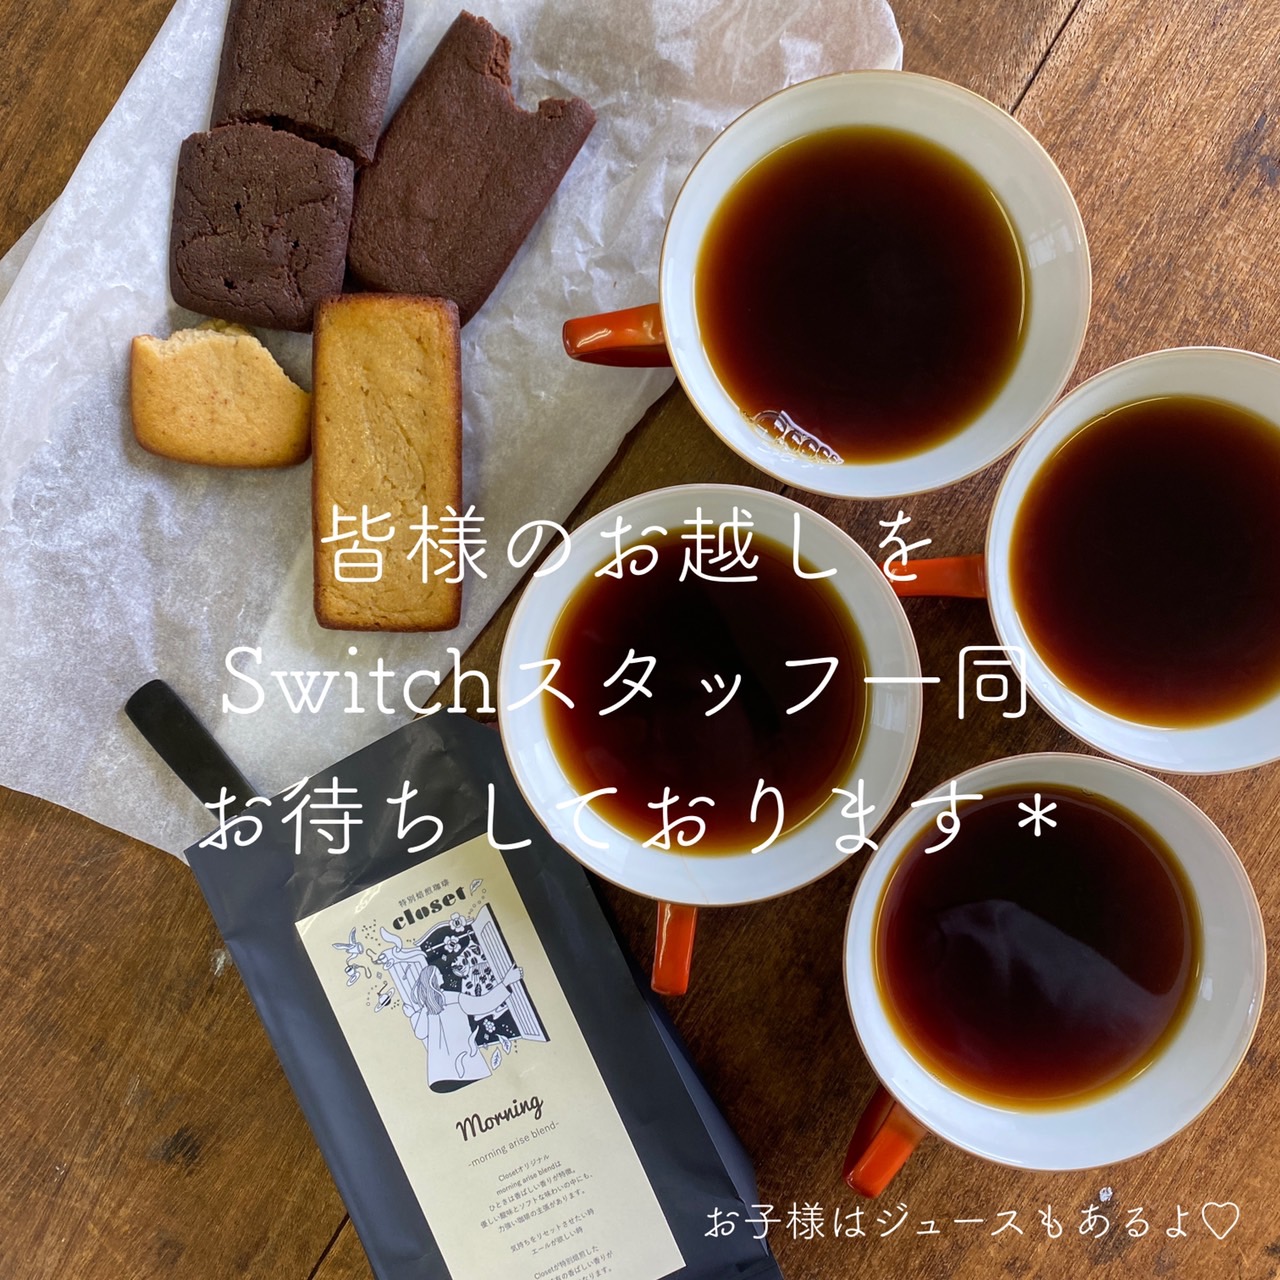 Switch優待カフェ | 超低糖質ブランパン専門店Switch